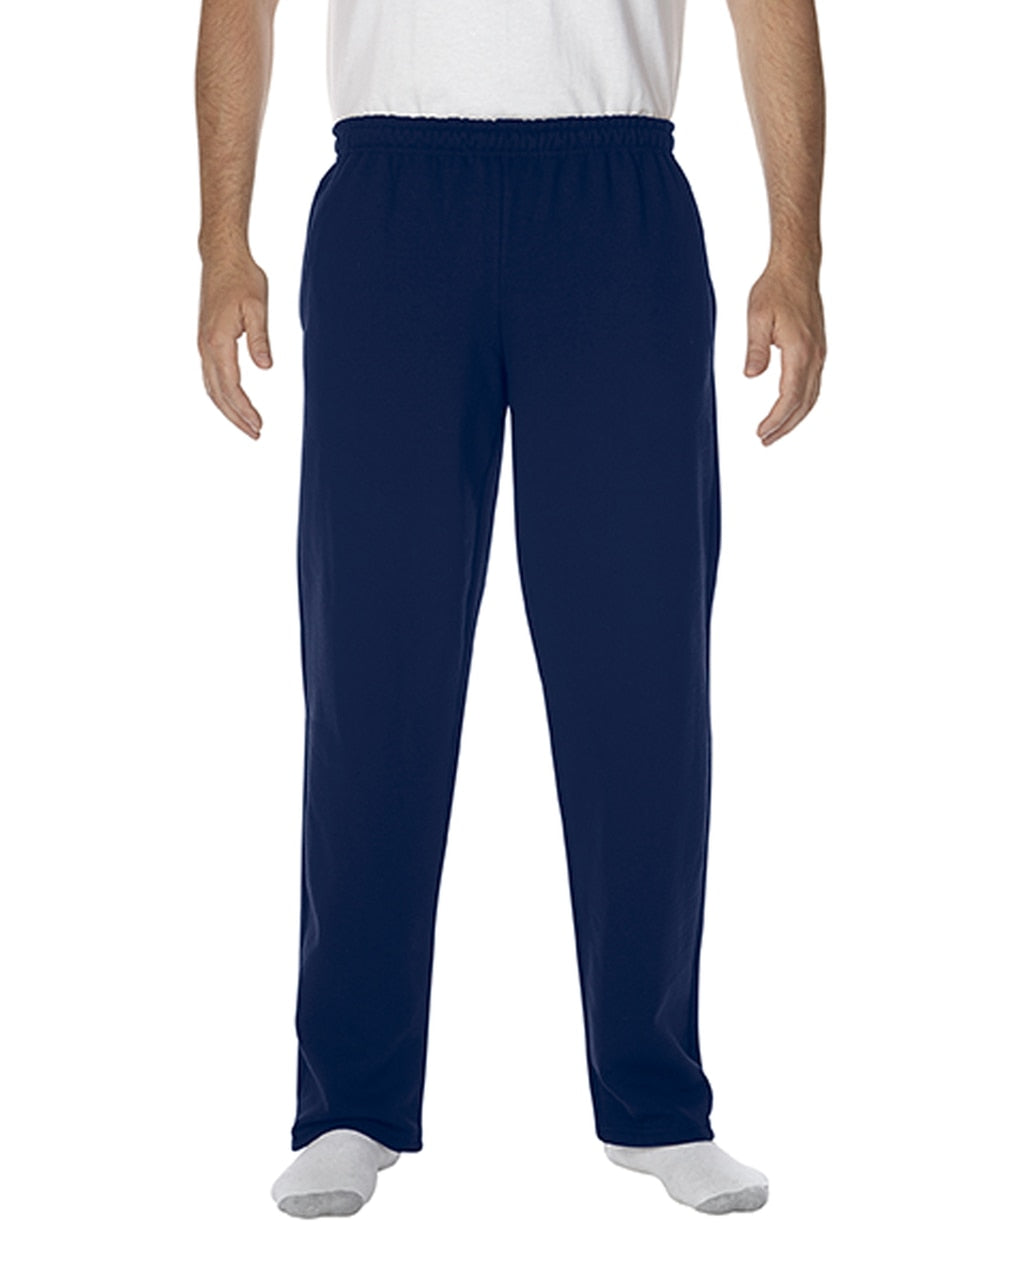 Men's Solid Color Open Bottom Pocketed Sweatpants